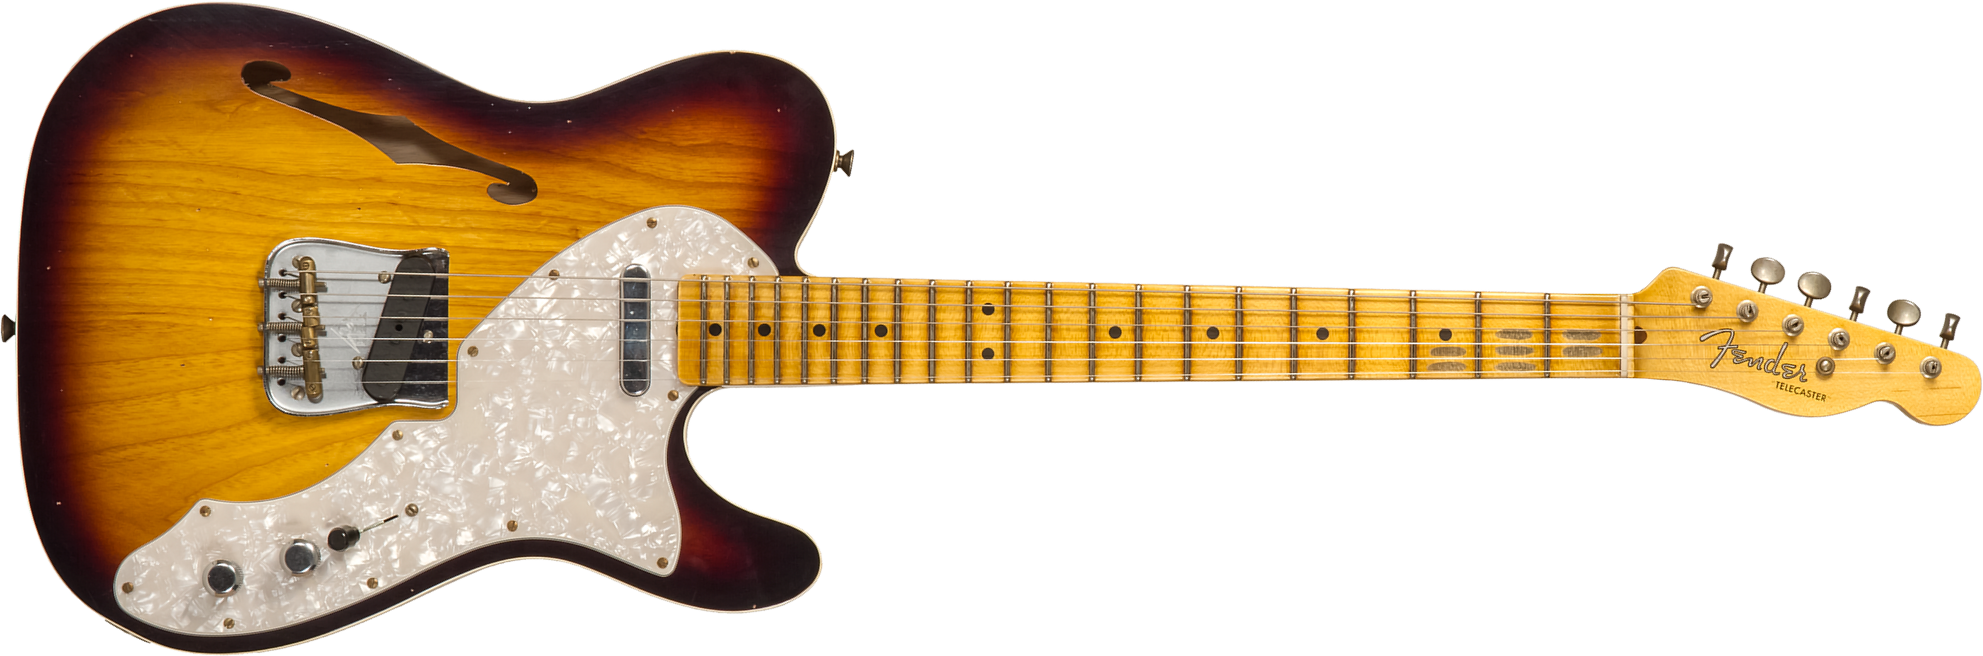 Fender Custom Shop Tele Thinline 50s Mn #cz574212 - Journeyman Relic Aged 2-color Sunburst - Televorm elektrische gitaar - Main picture